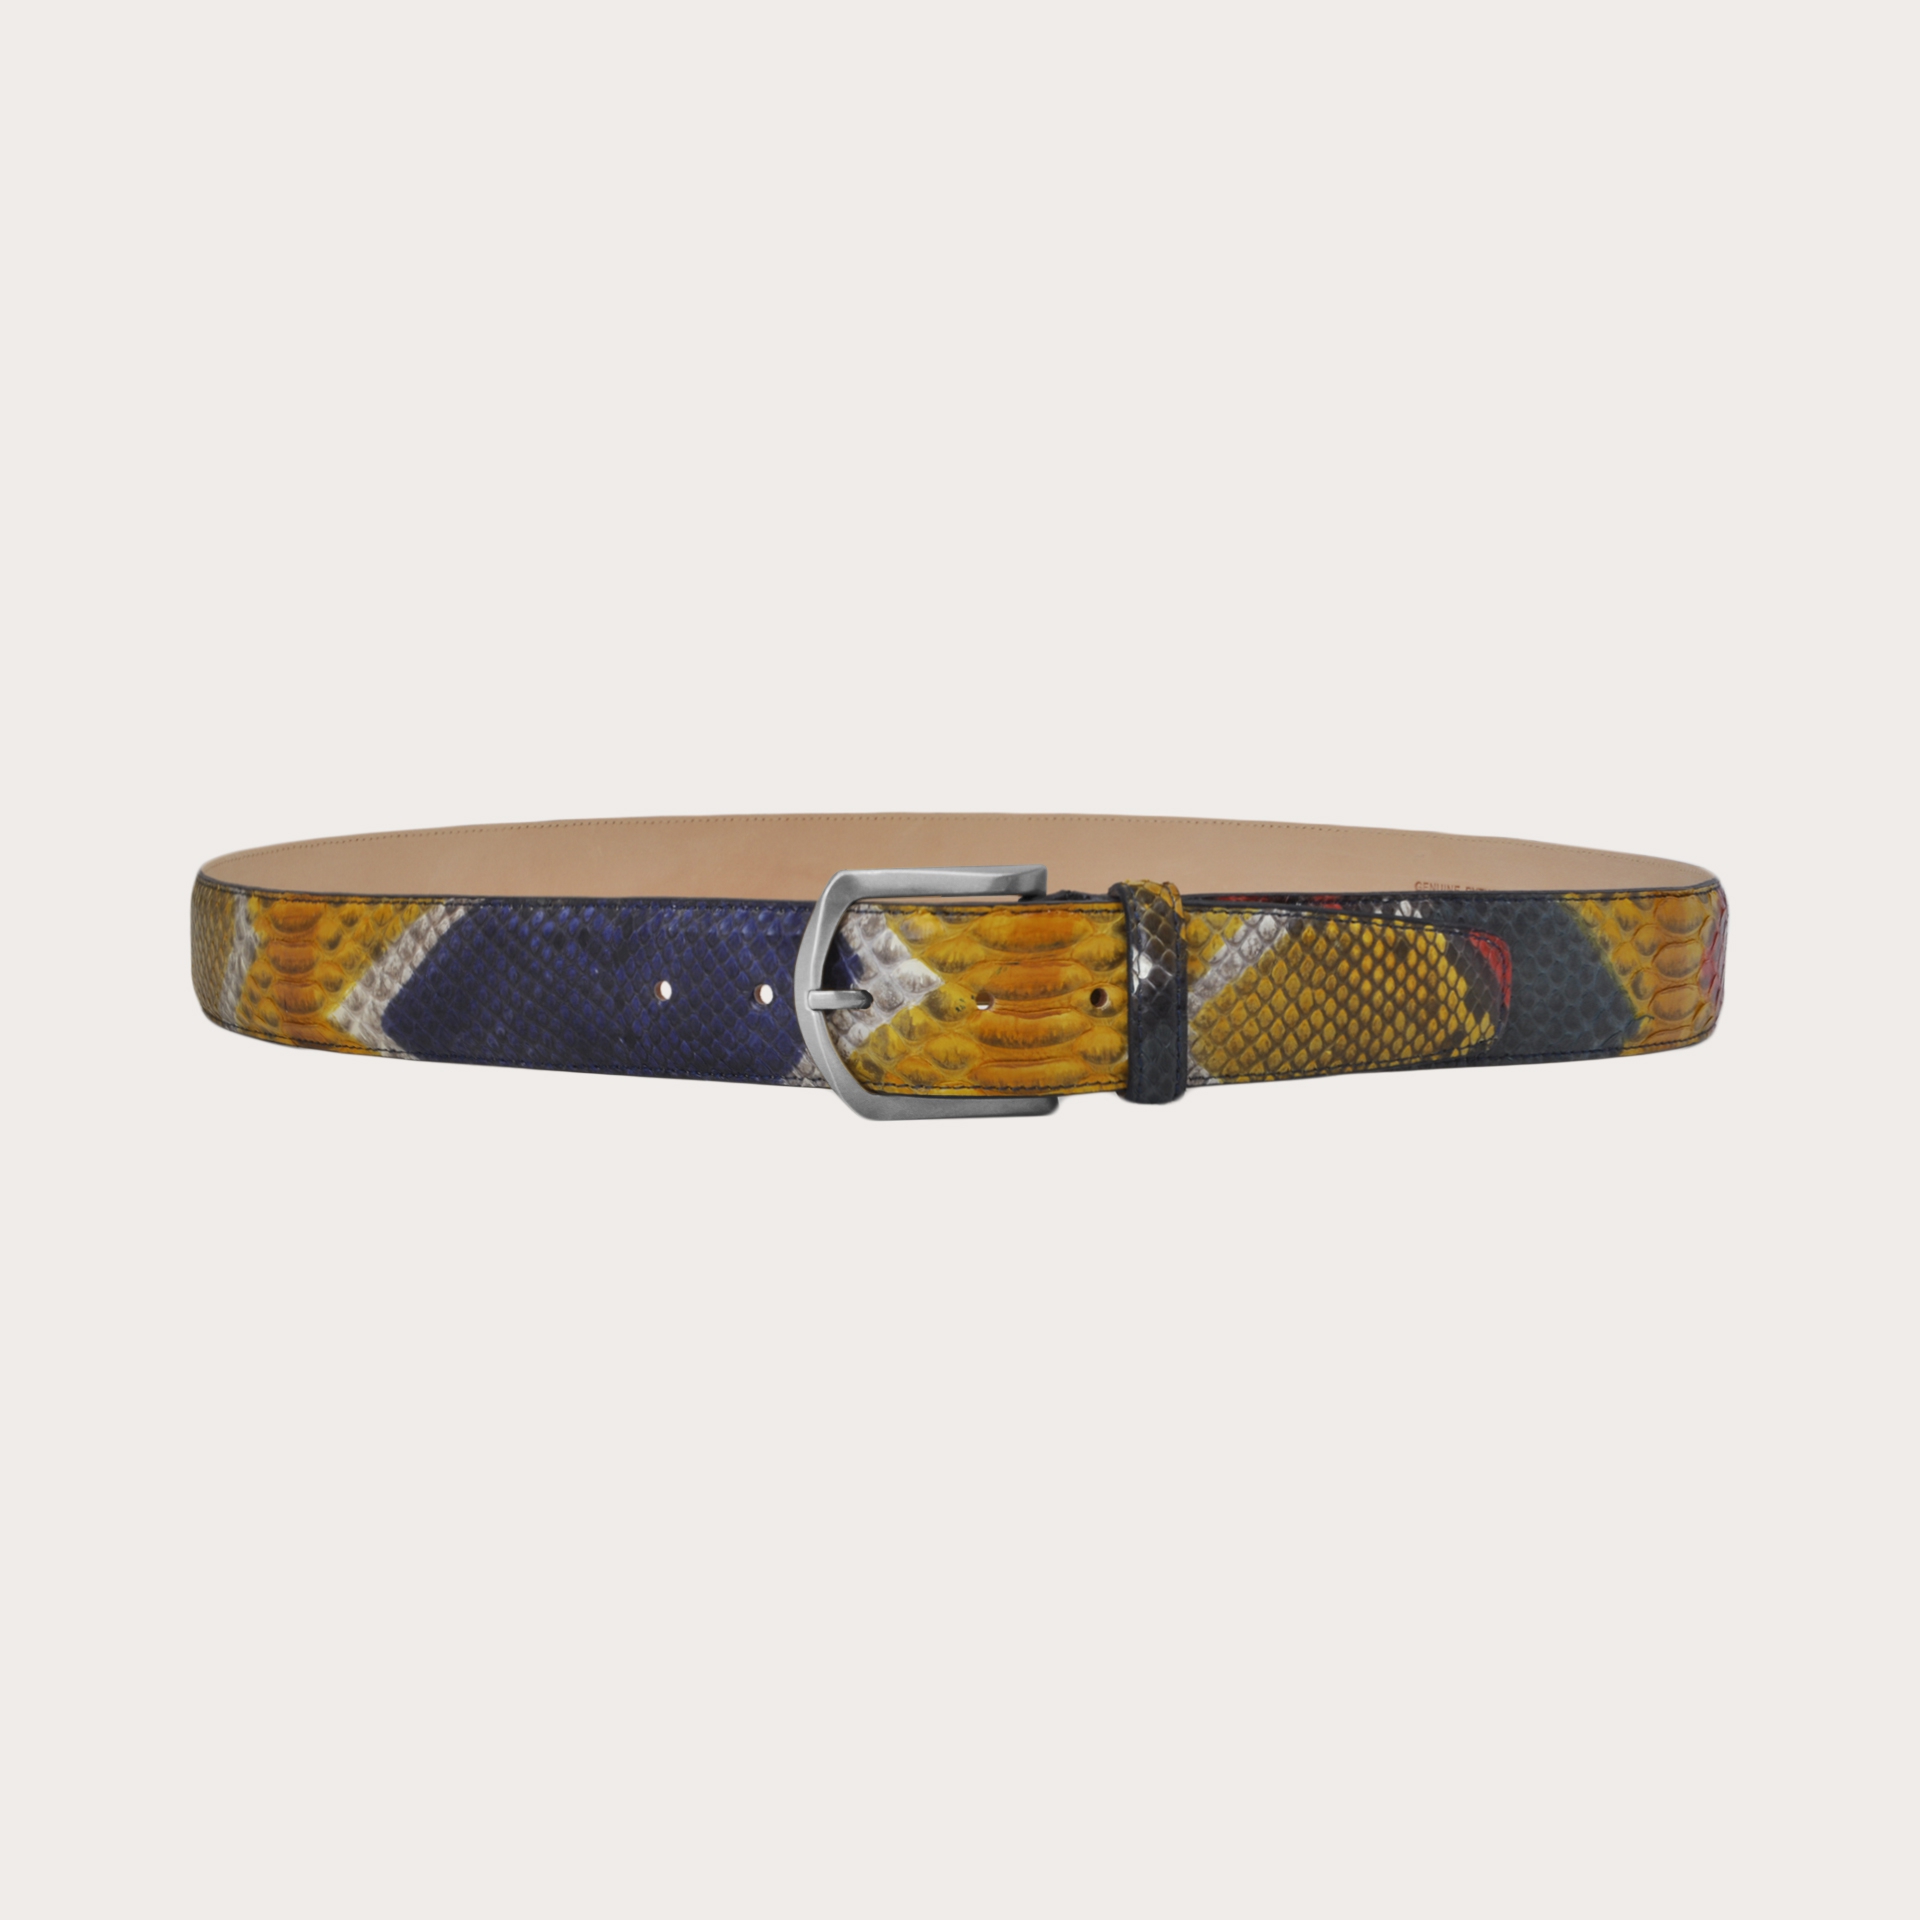 BRUCLE Cintura alta pitone sportiva con fibbia argento nickel free, multicolor